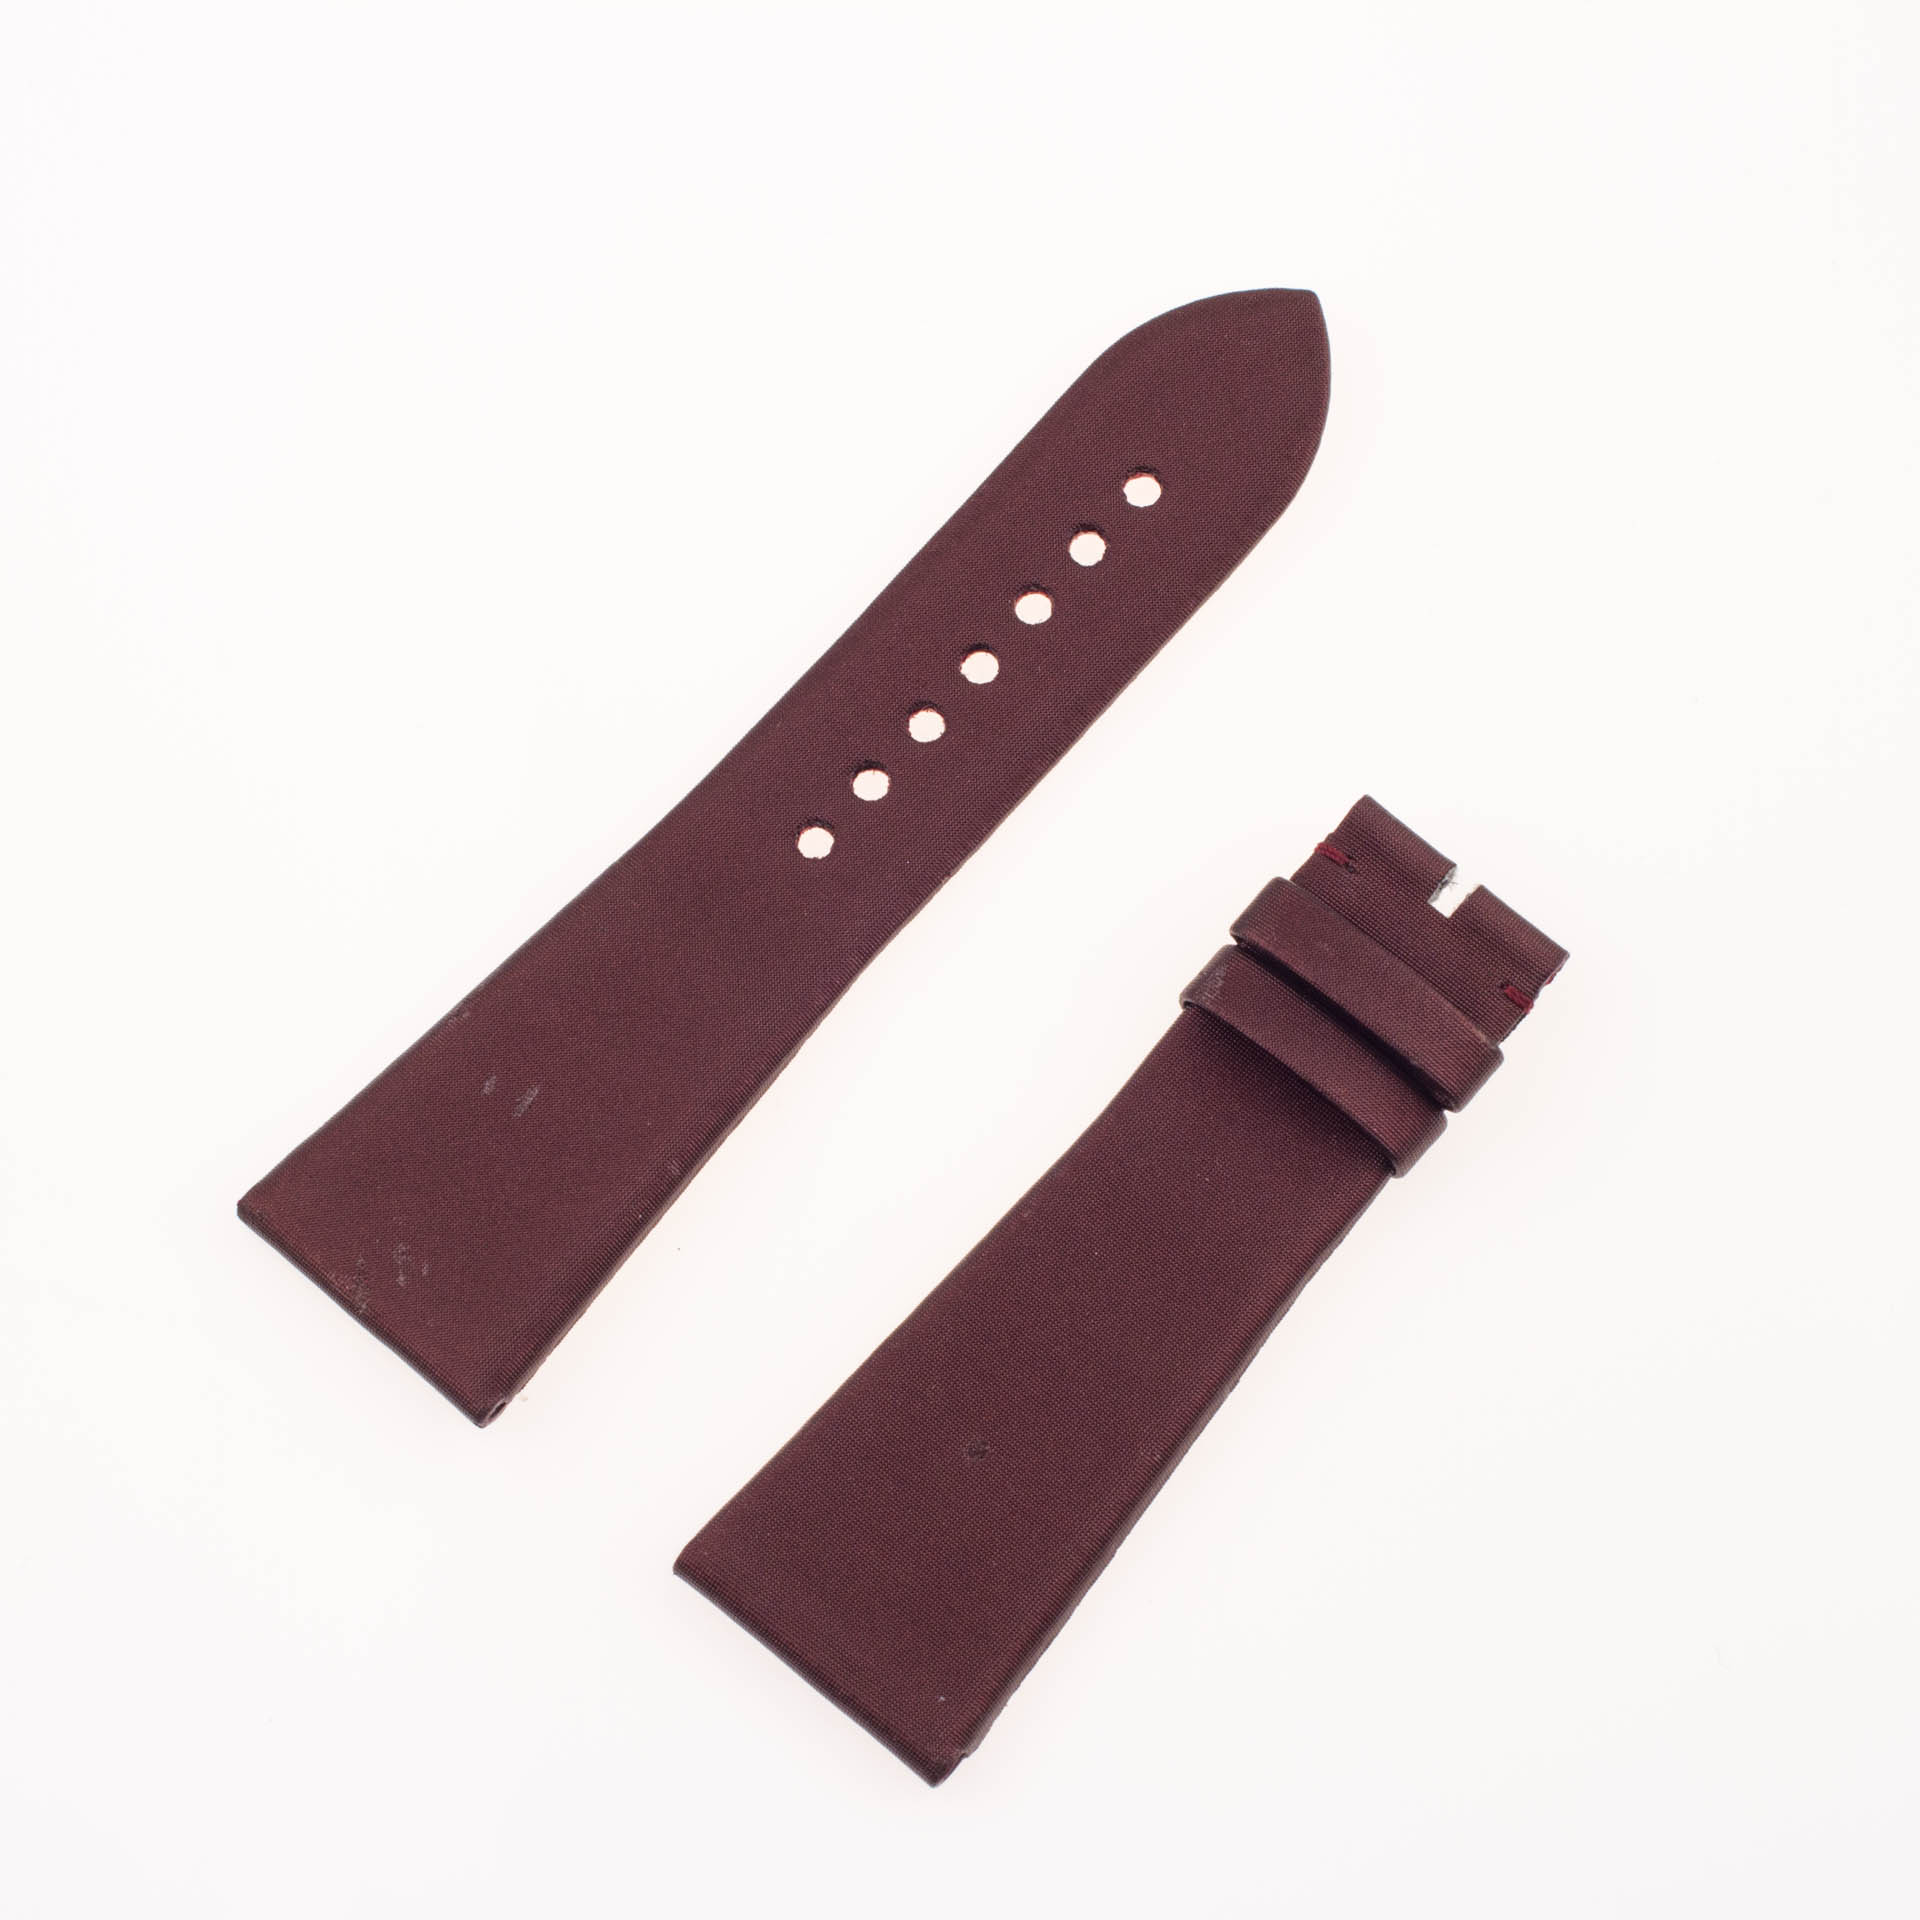 Cartier burgundy / bourdeaux satin strap (24x18) for tang buckle